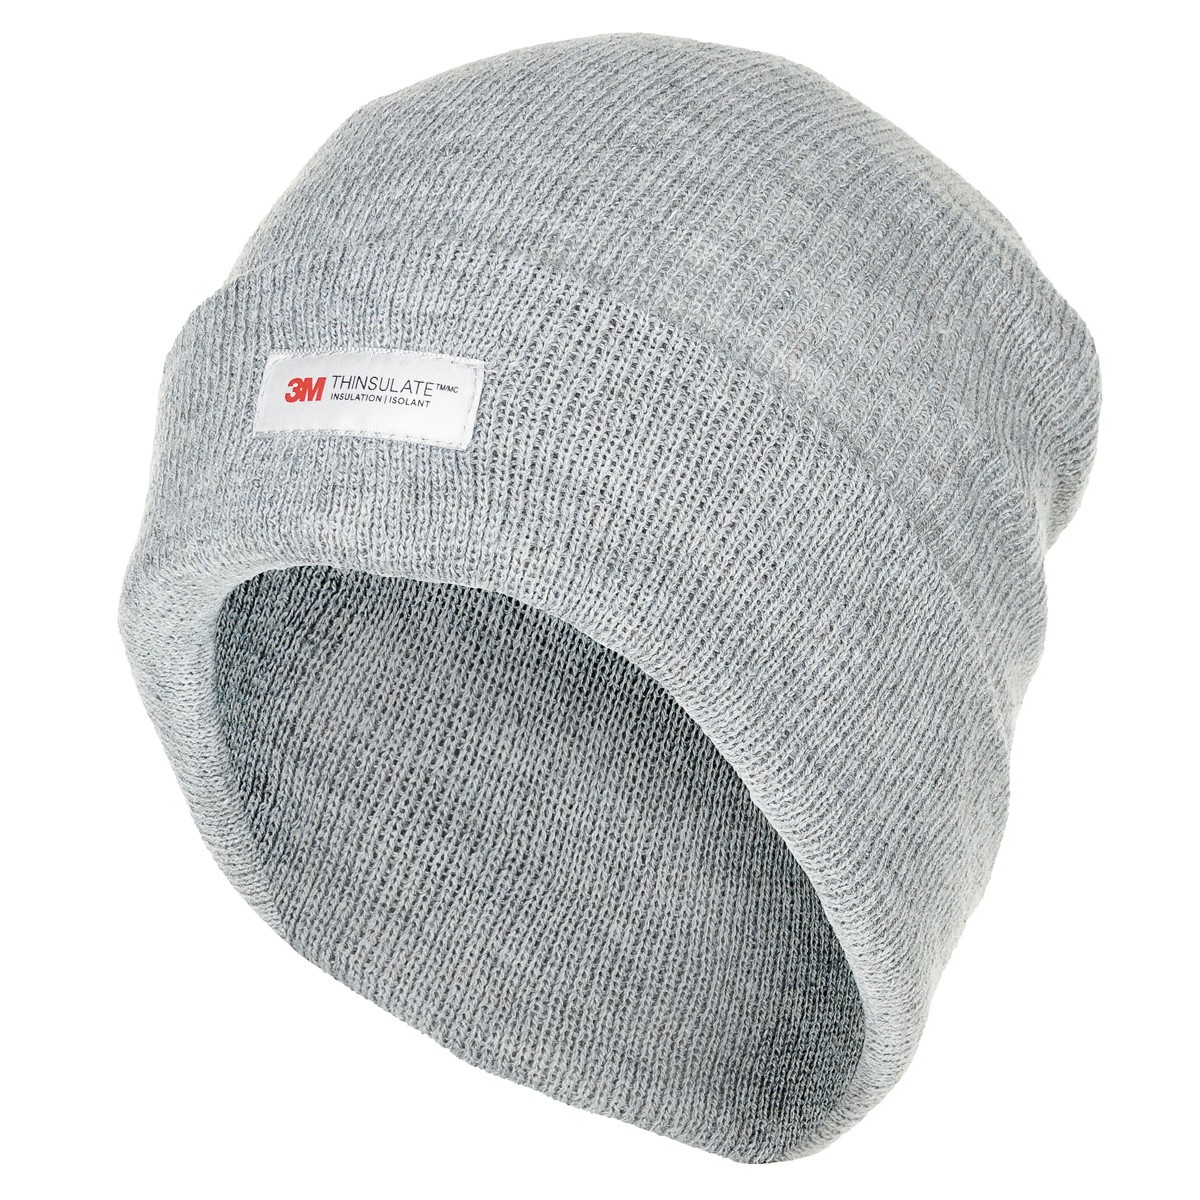 Bonnet Thinsulate Insulation gris